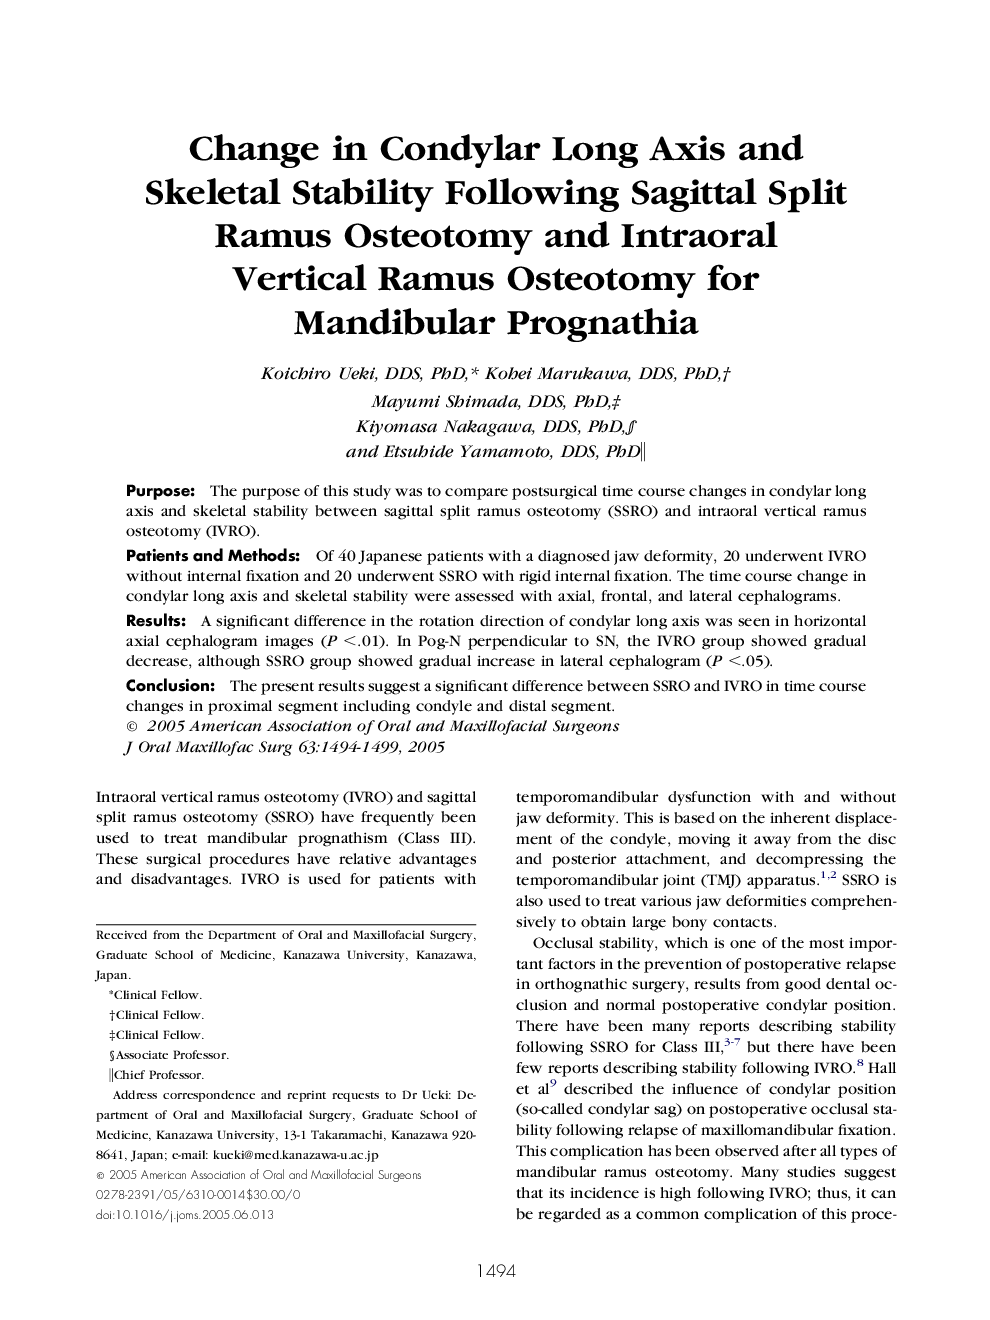 Change in Condylar Long Axis and Skeletal Stability Following Sagittal Split Ramus Osteotomy and Intraoral Vertical Ramus Osteotomy for Mandibular Prognathia